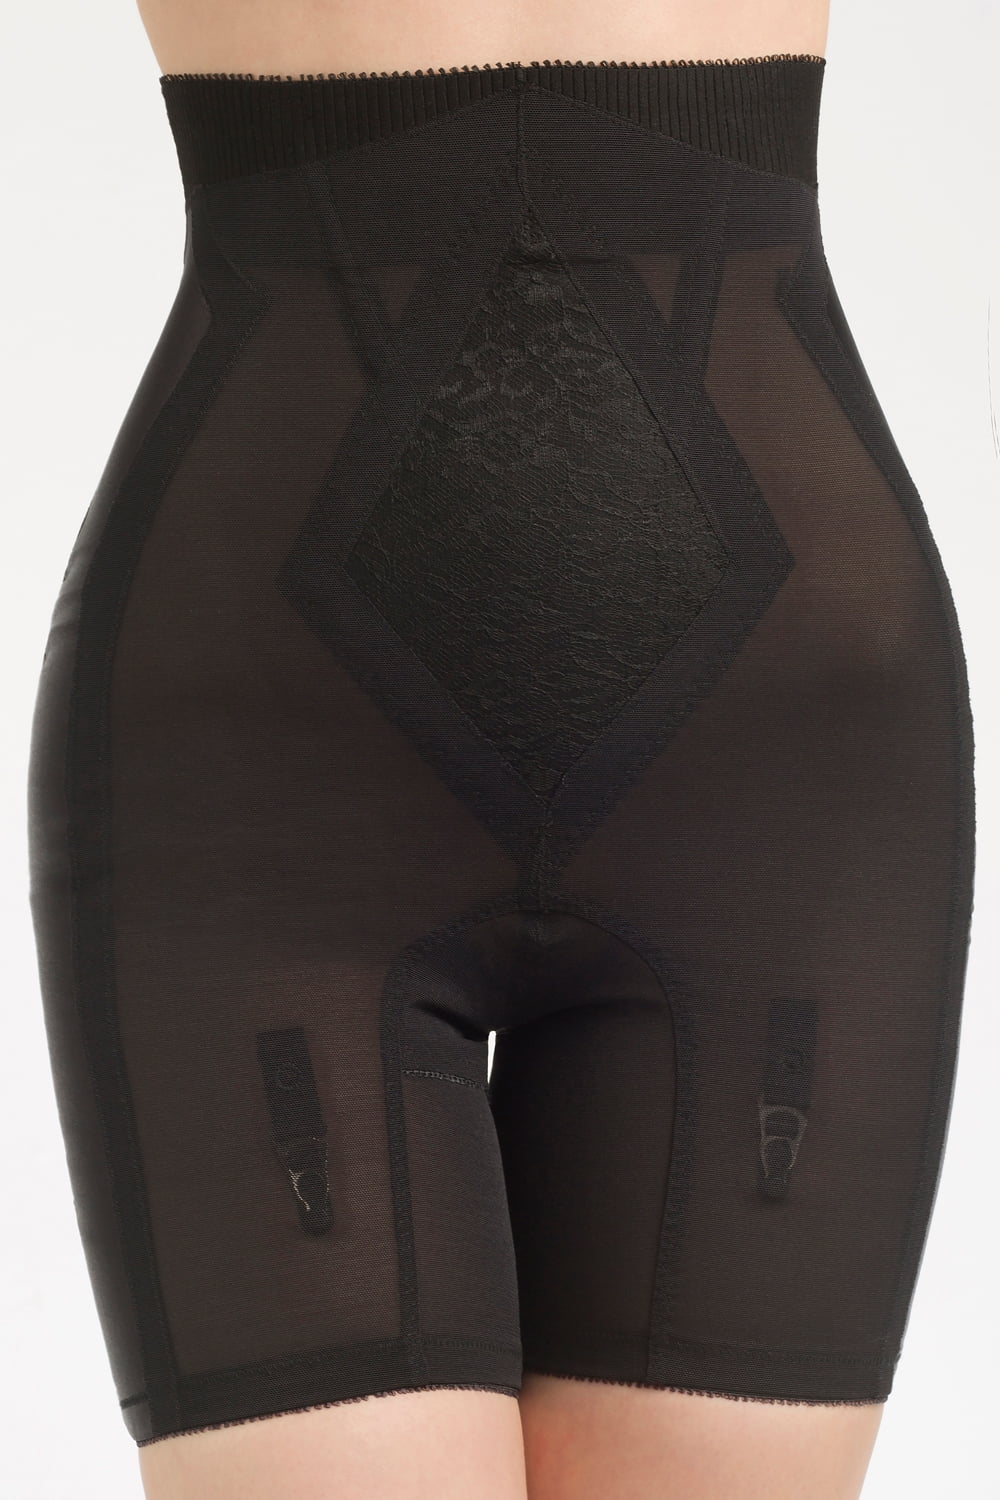 Women's Rago 696 High Waist Panty Girdle (Black 2X) 